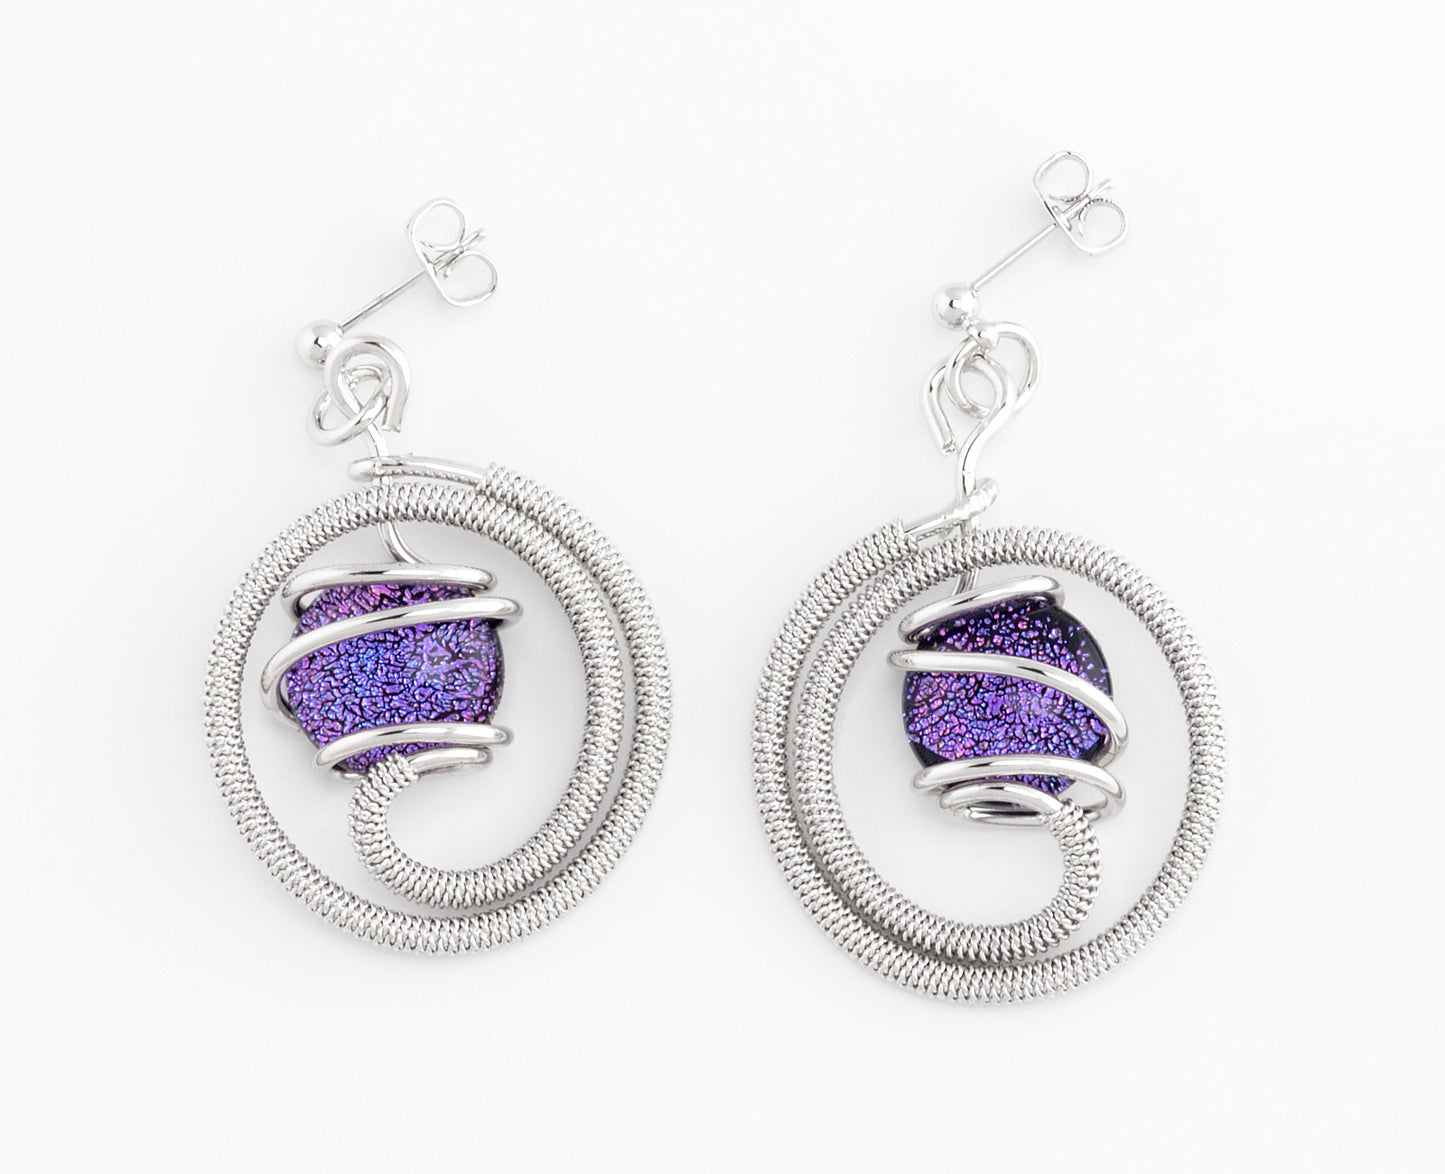 Futura Reflex Plus earrings in Murano glass - Vetri D'arte